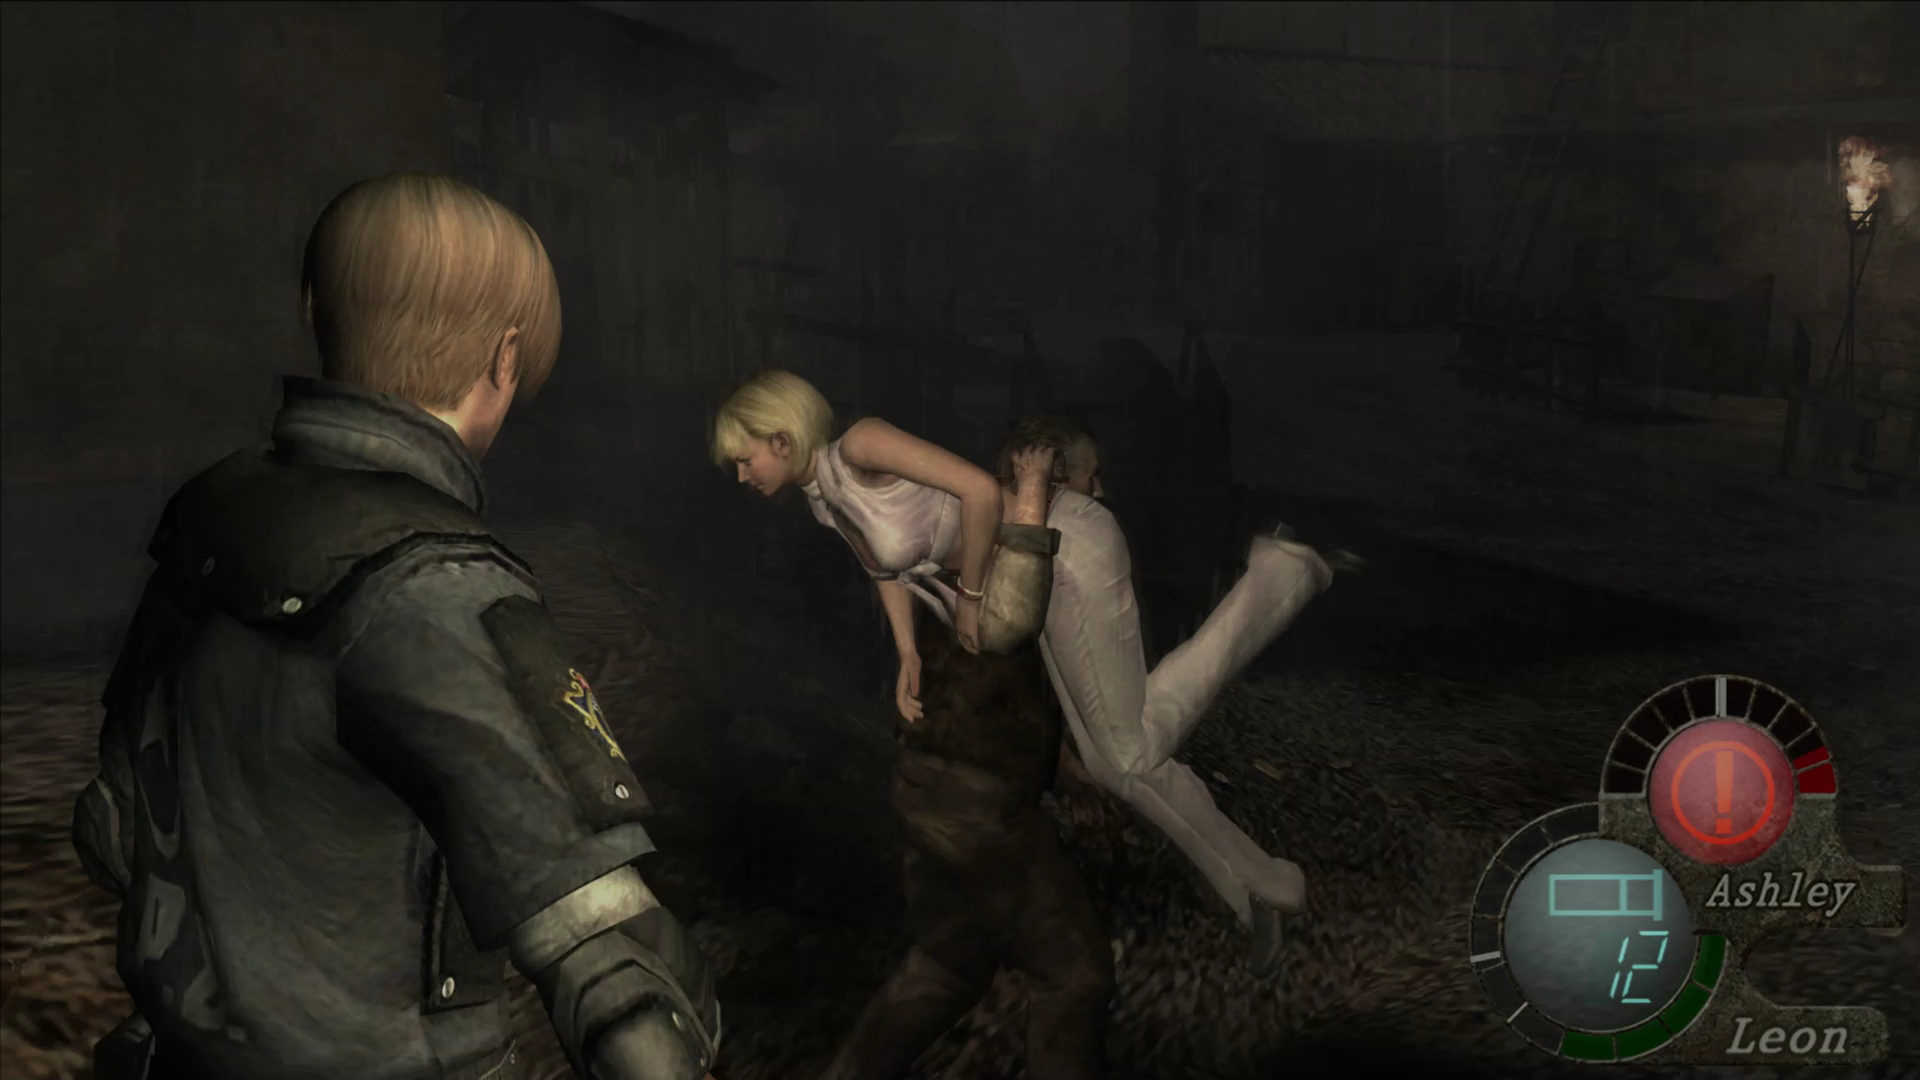 Resident Evil IV 4 Remake Ashley Graham Romantic Cosplay Costume